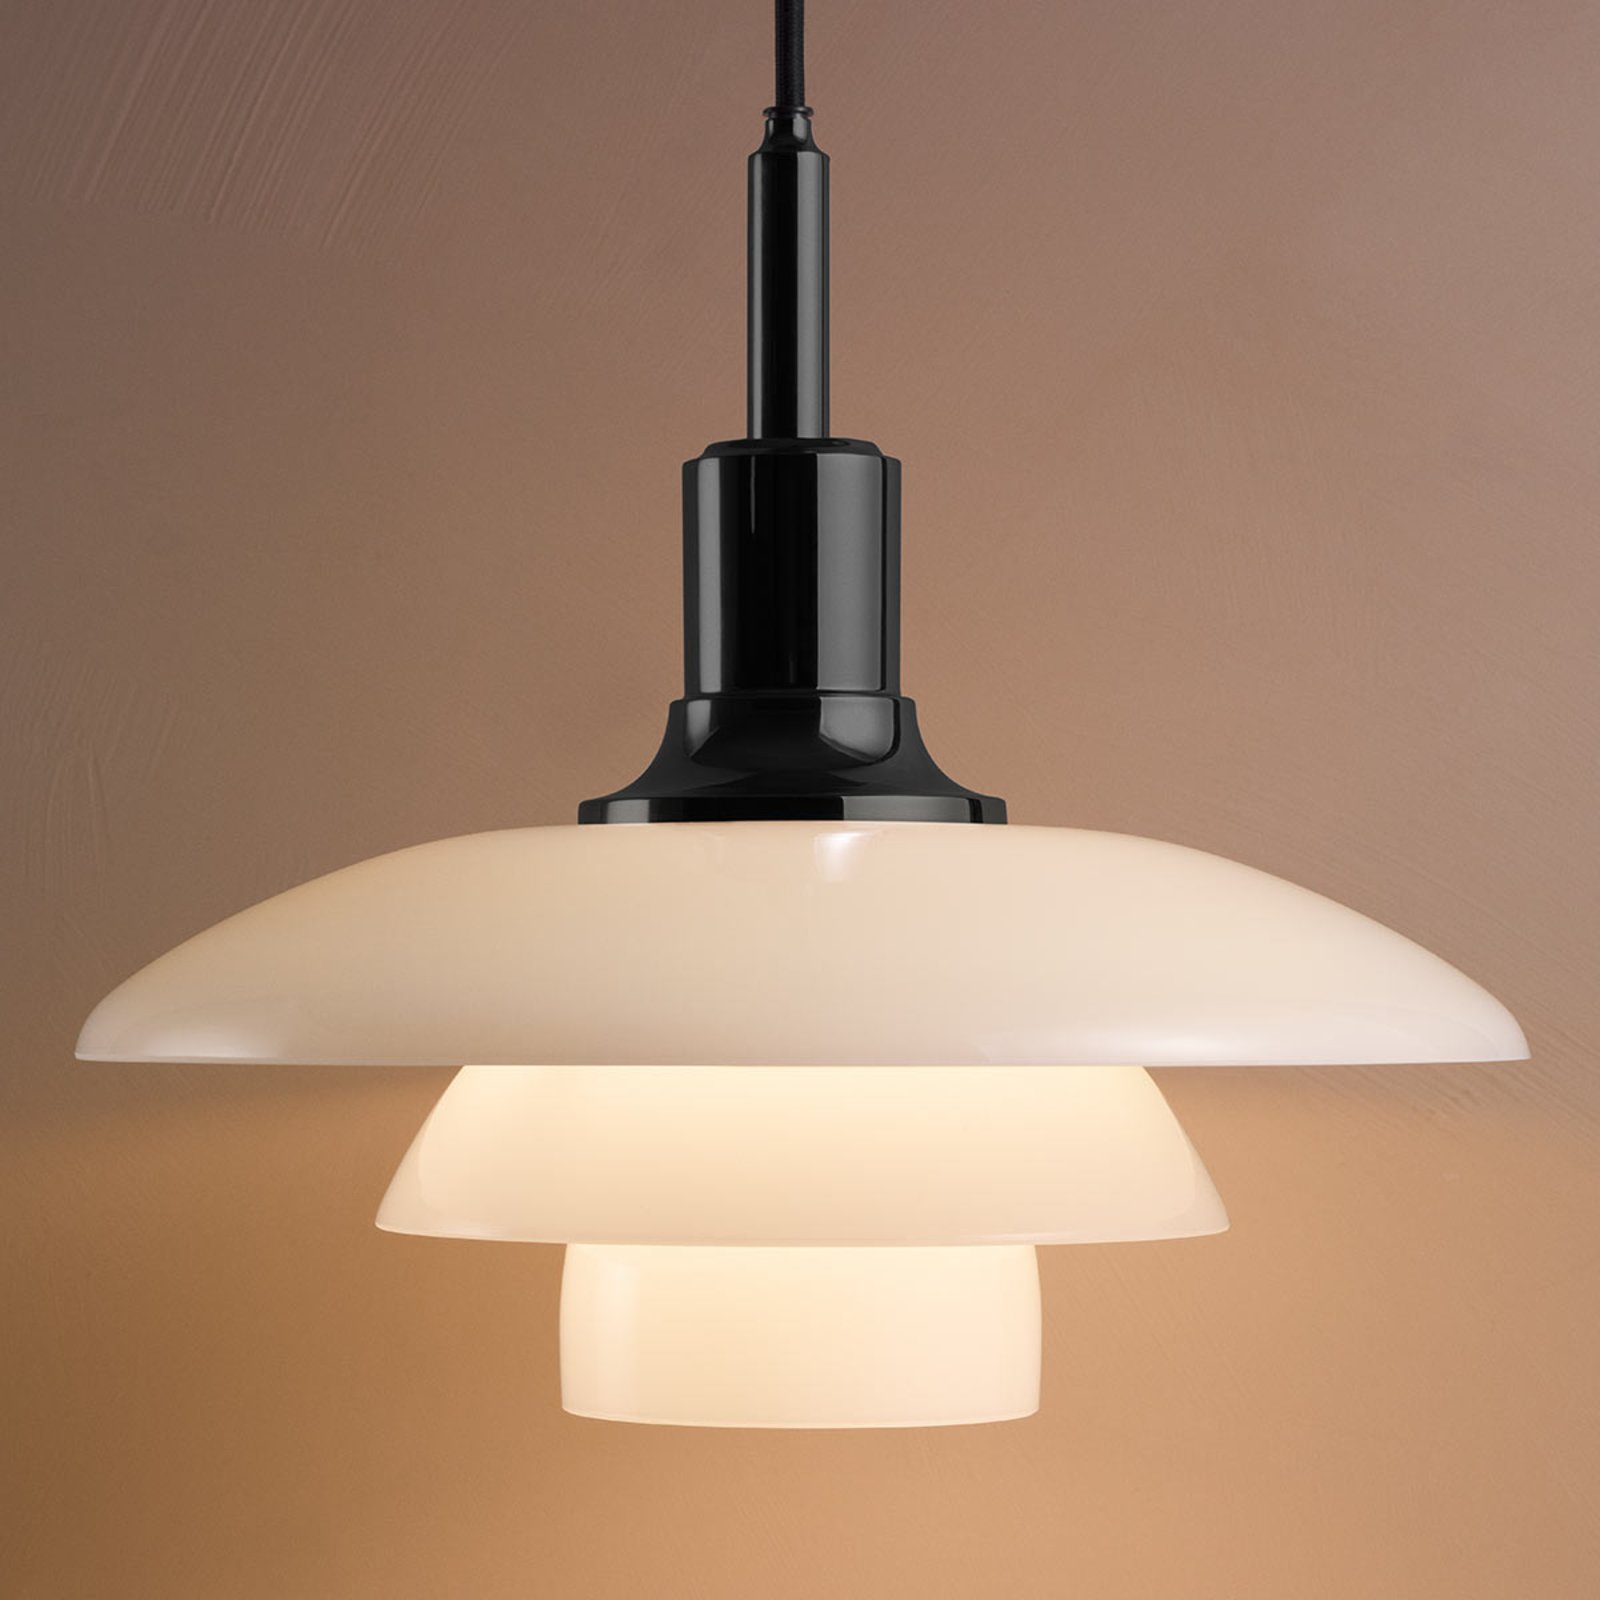 Decoratieve hanglamp PH 3/2, zwart